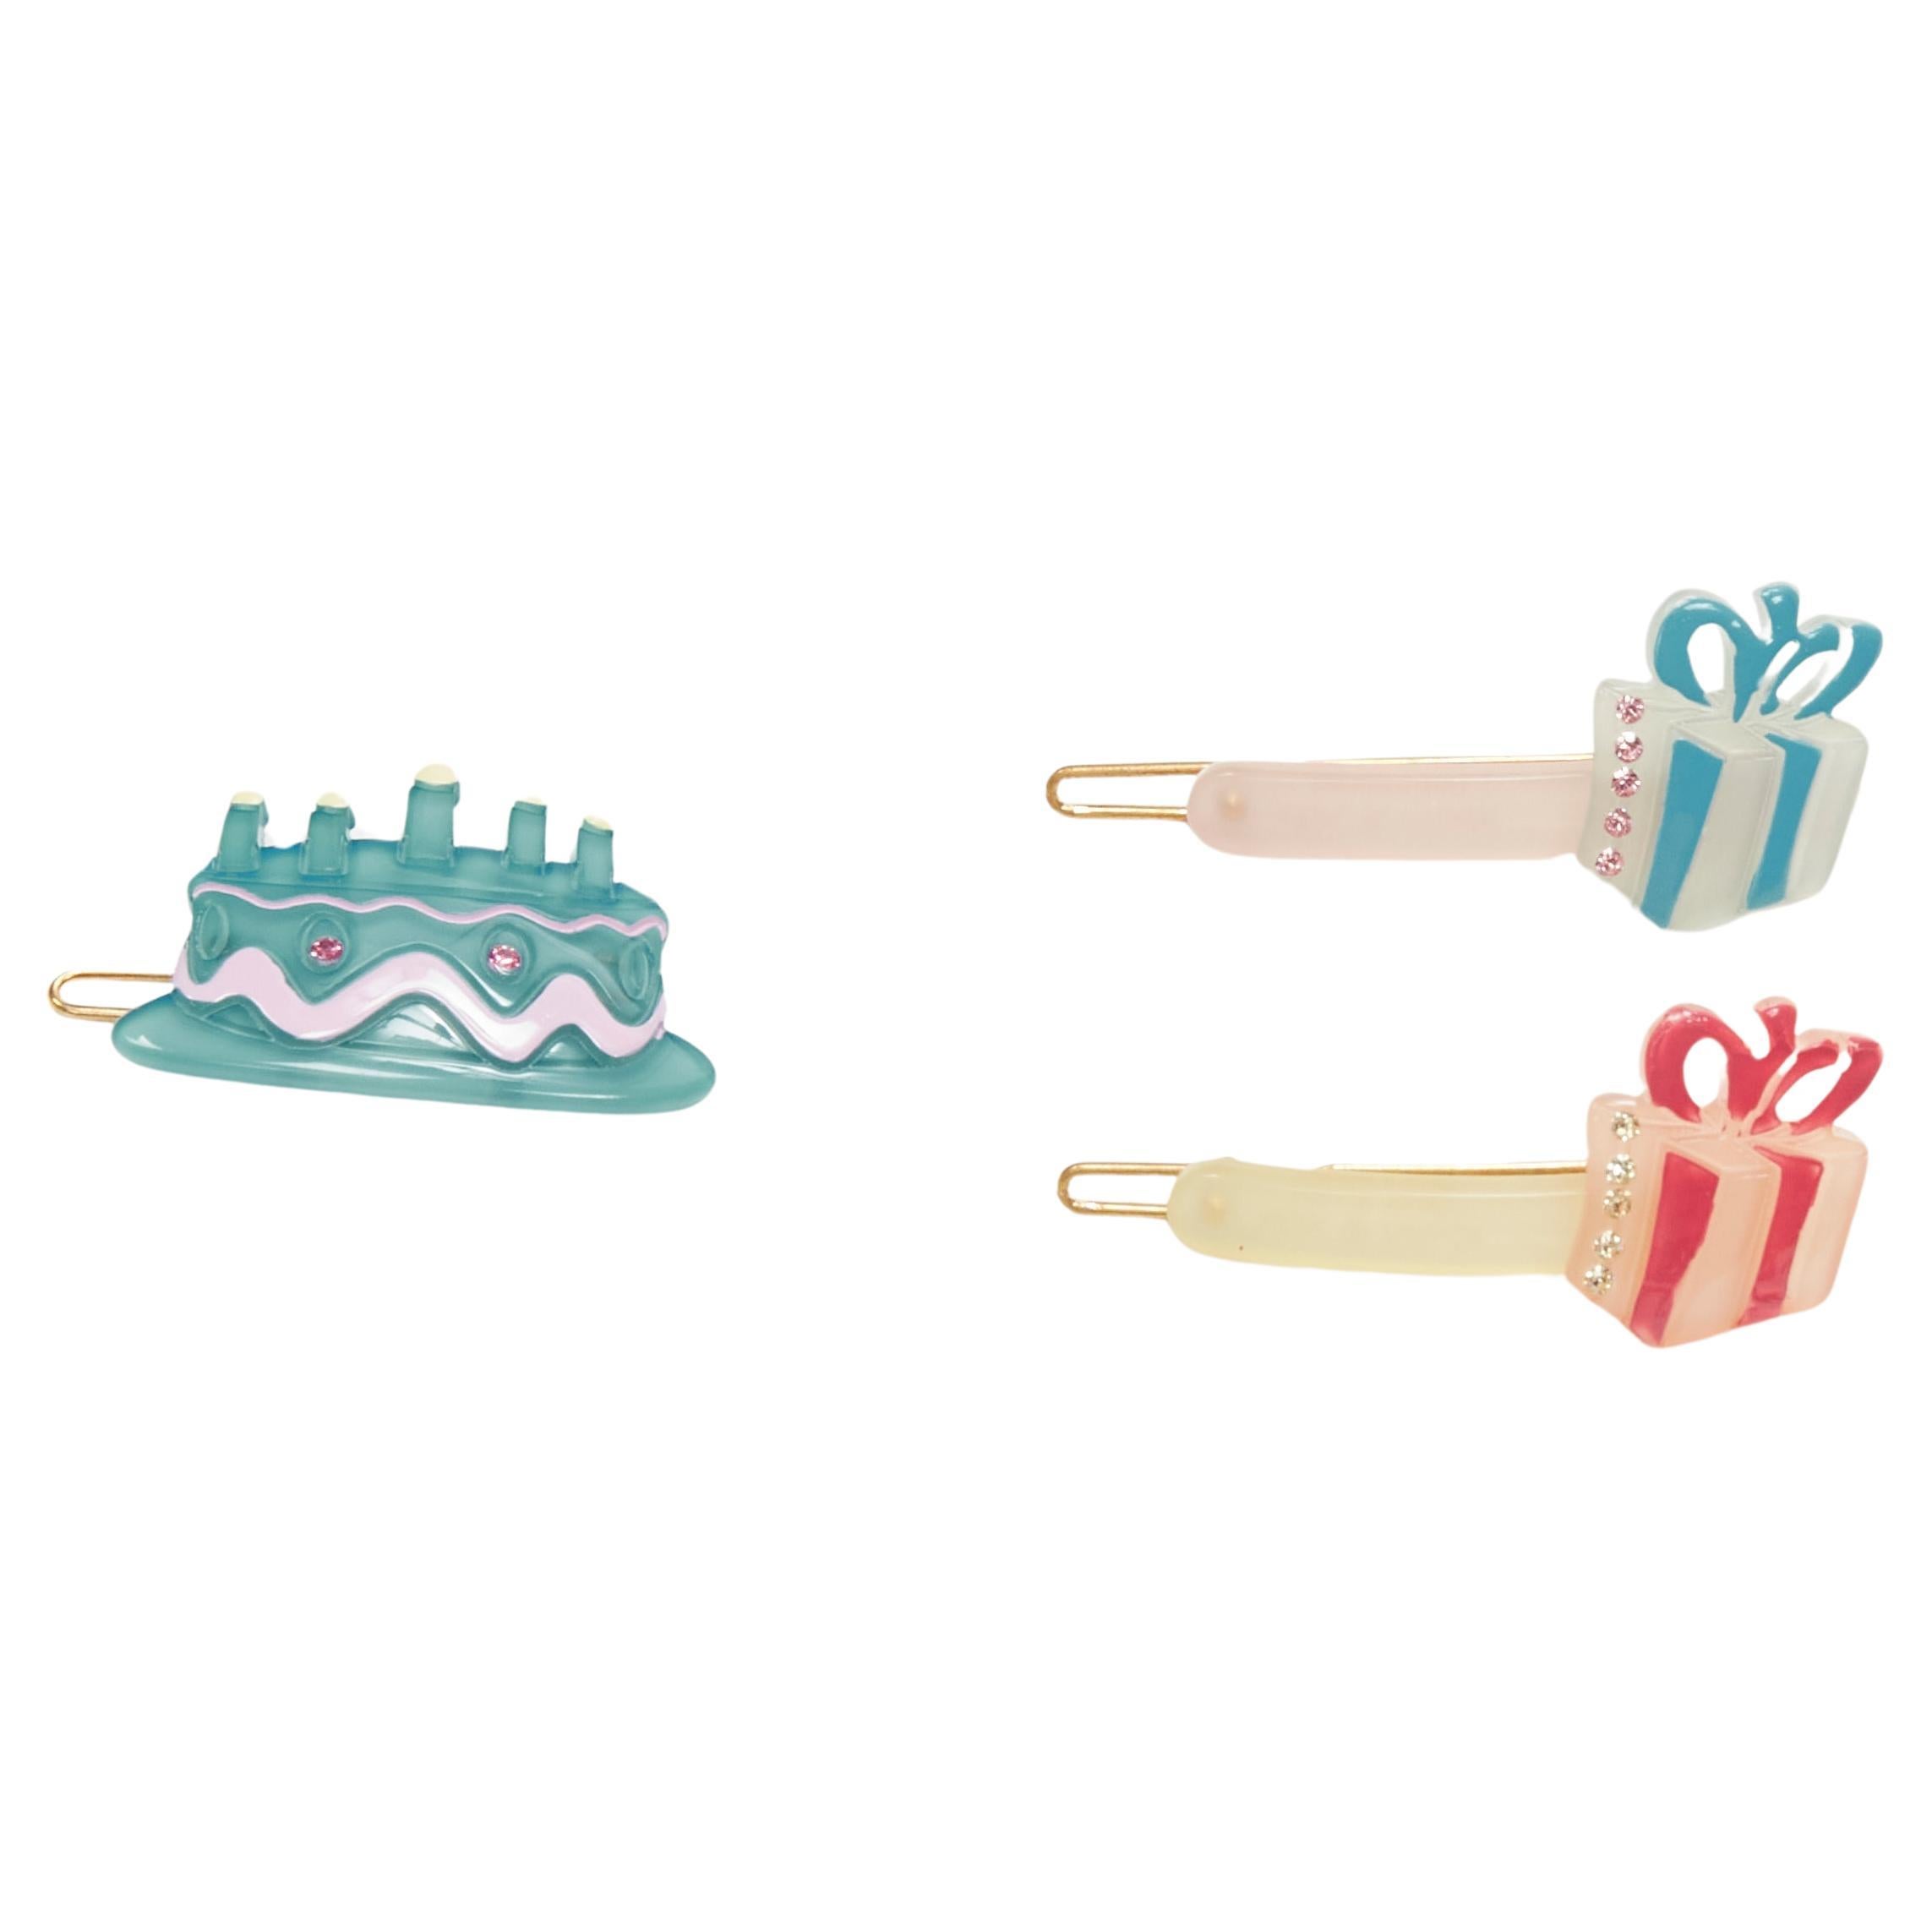 CHIC & MODE Alexandre Zouari bunten Kristall Geburtstagskuchen Geschenke Haarspangen X3 im Angebot